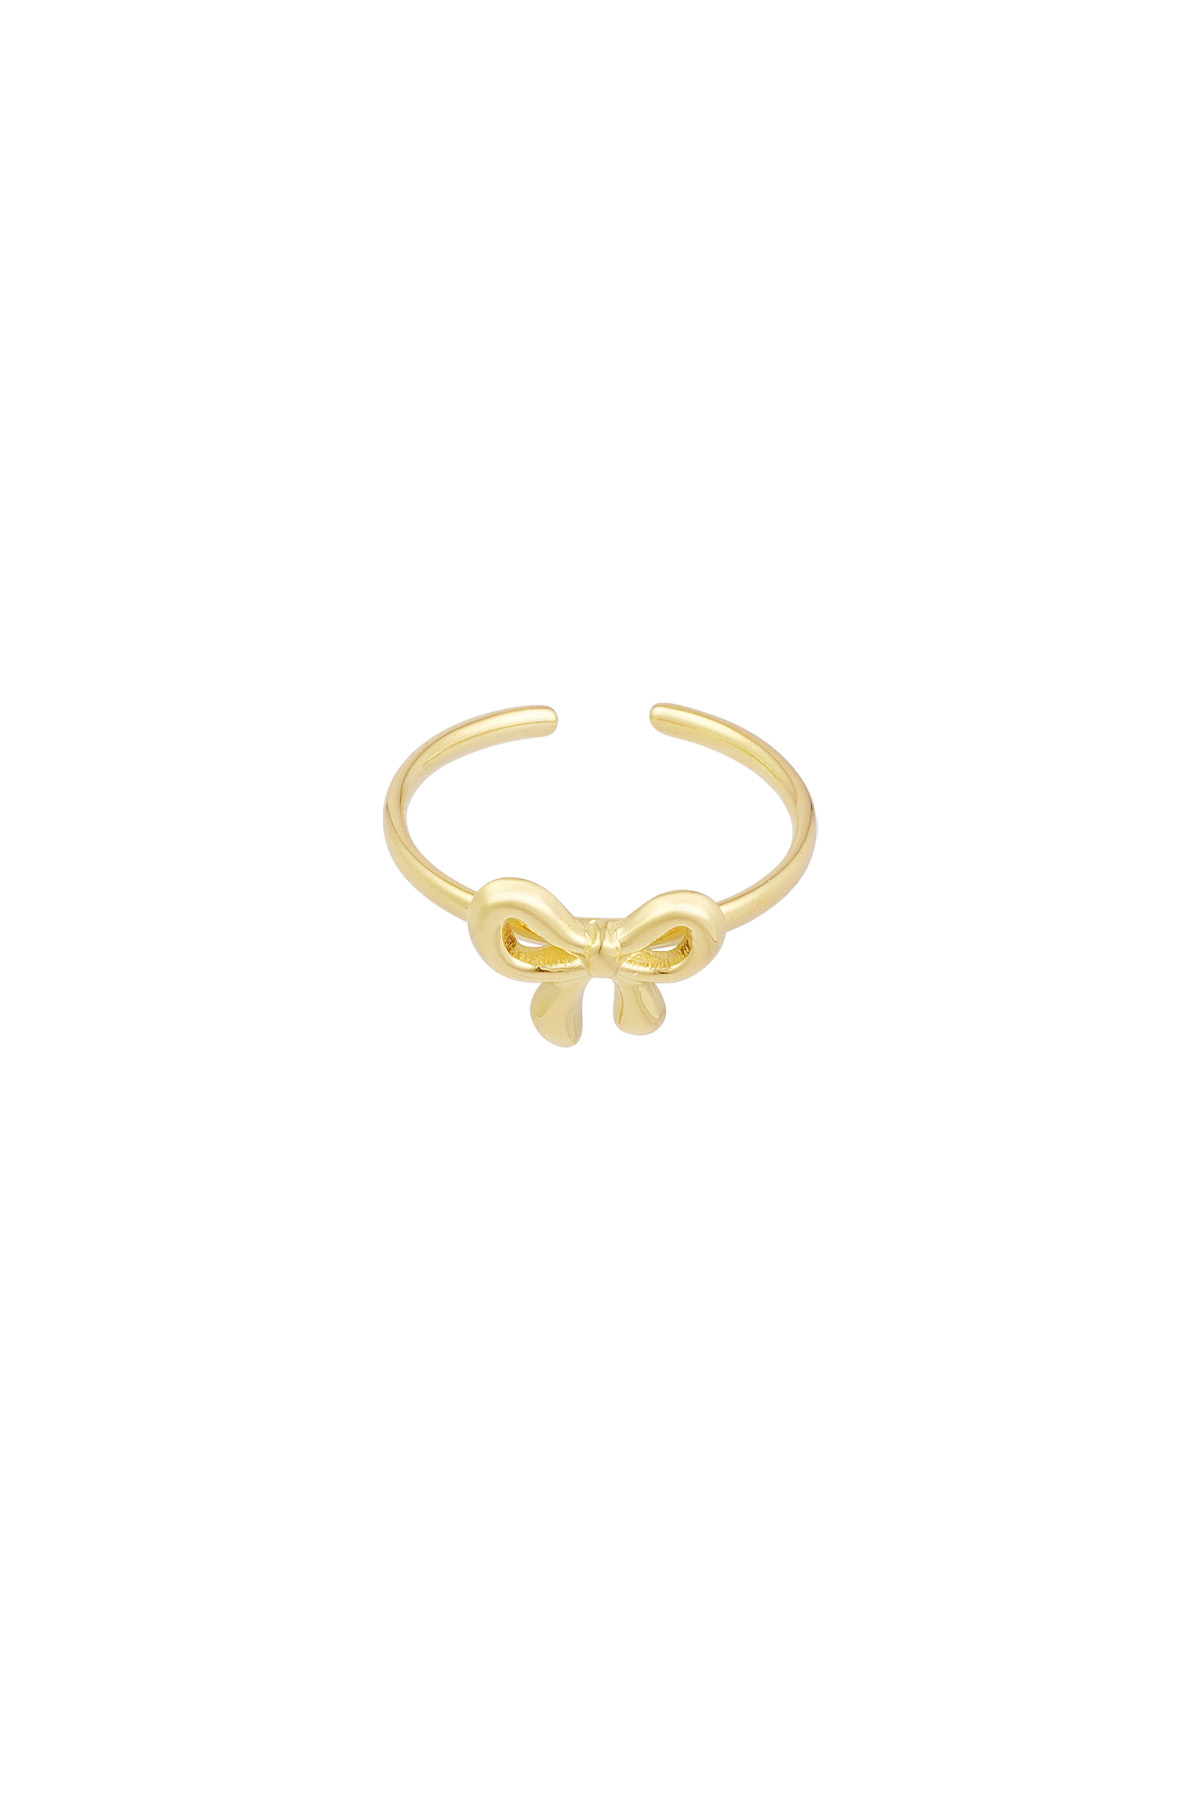 Ring bow life - goud  h5 